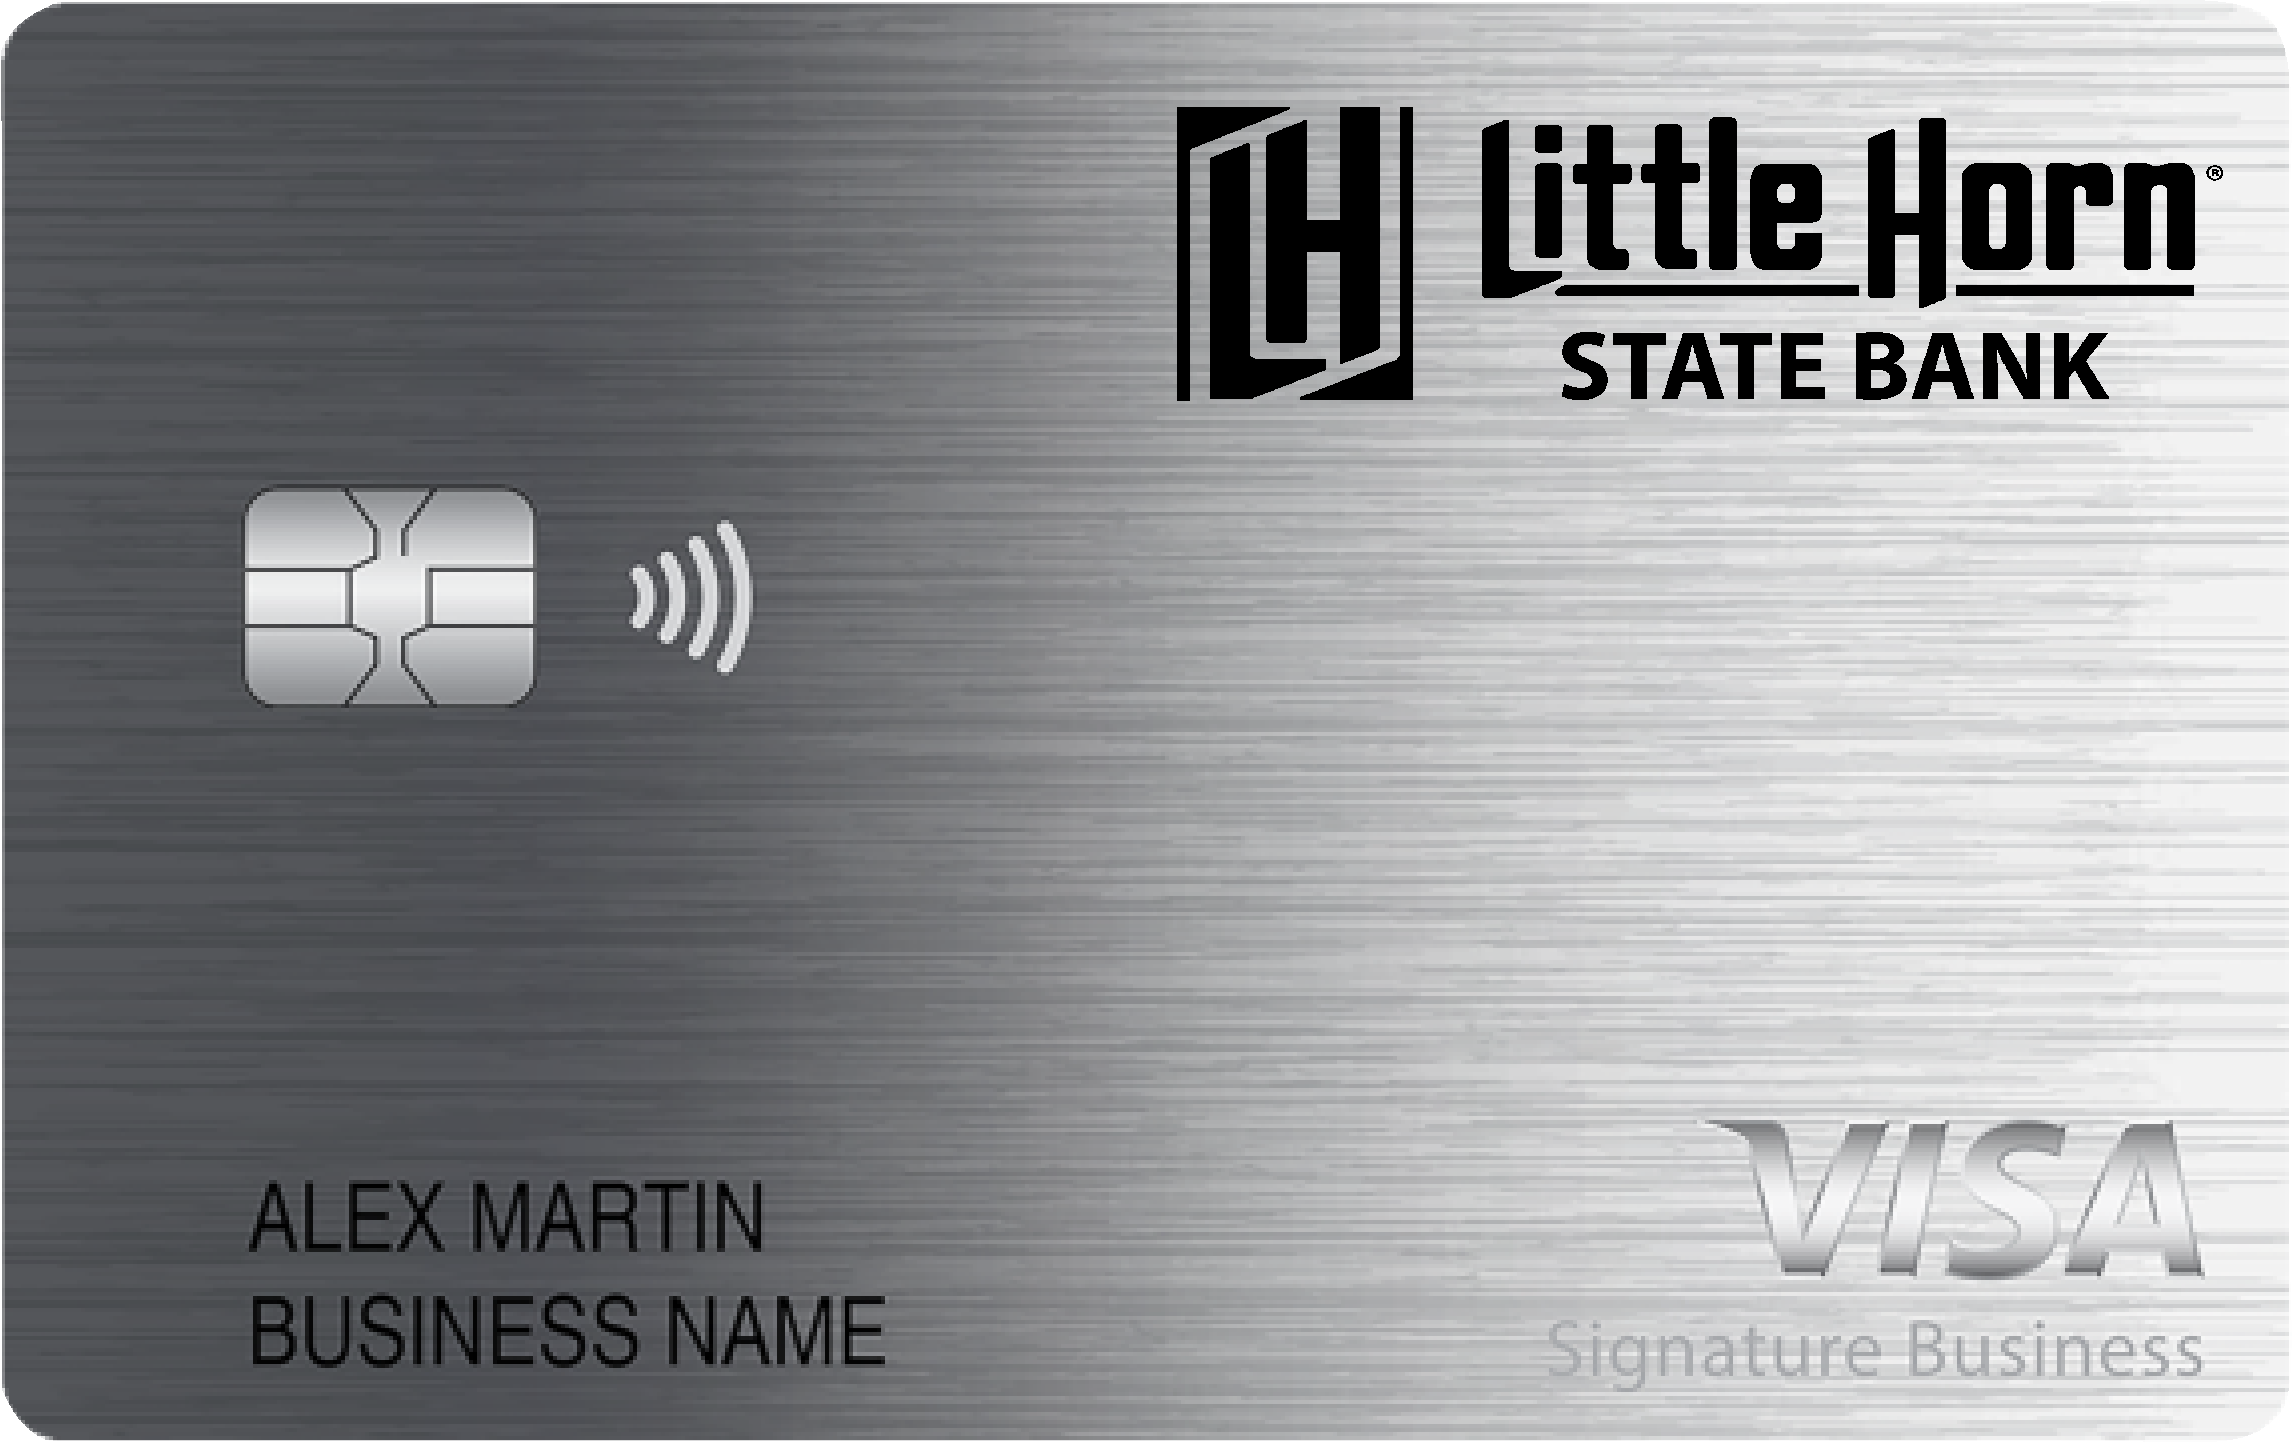 Little Horn State Bank Smart Business Rewards Card